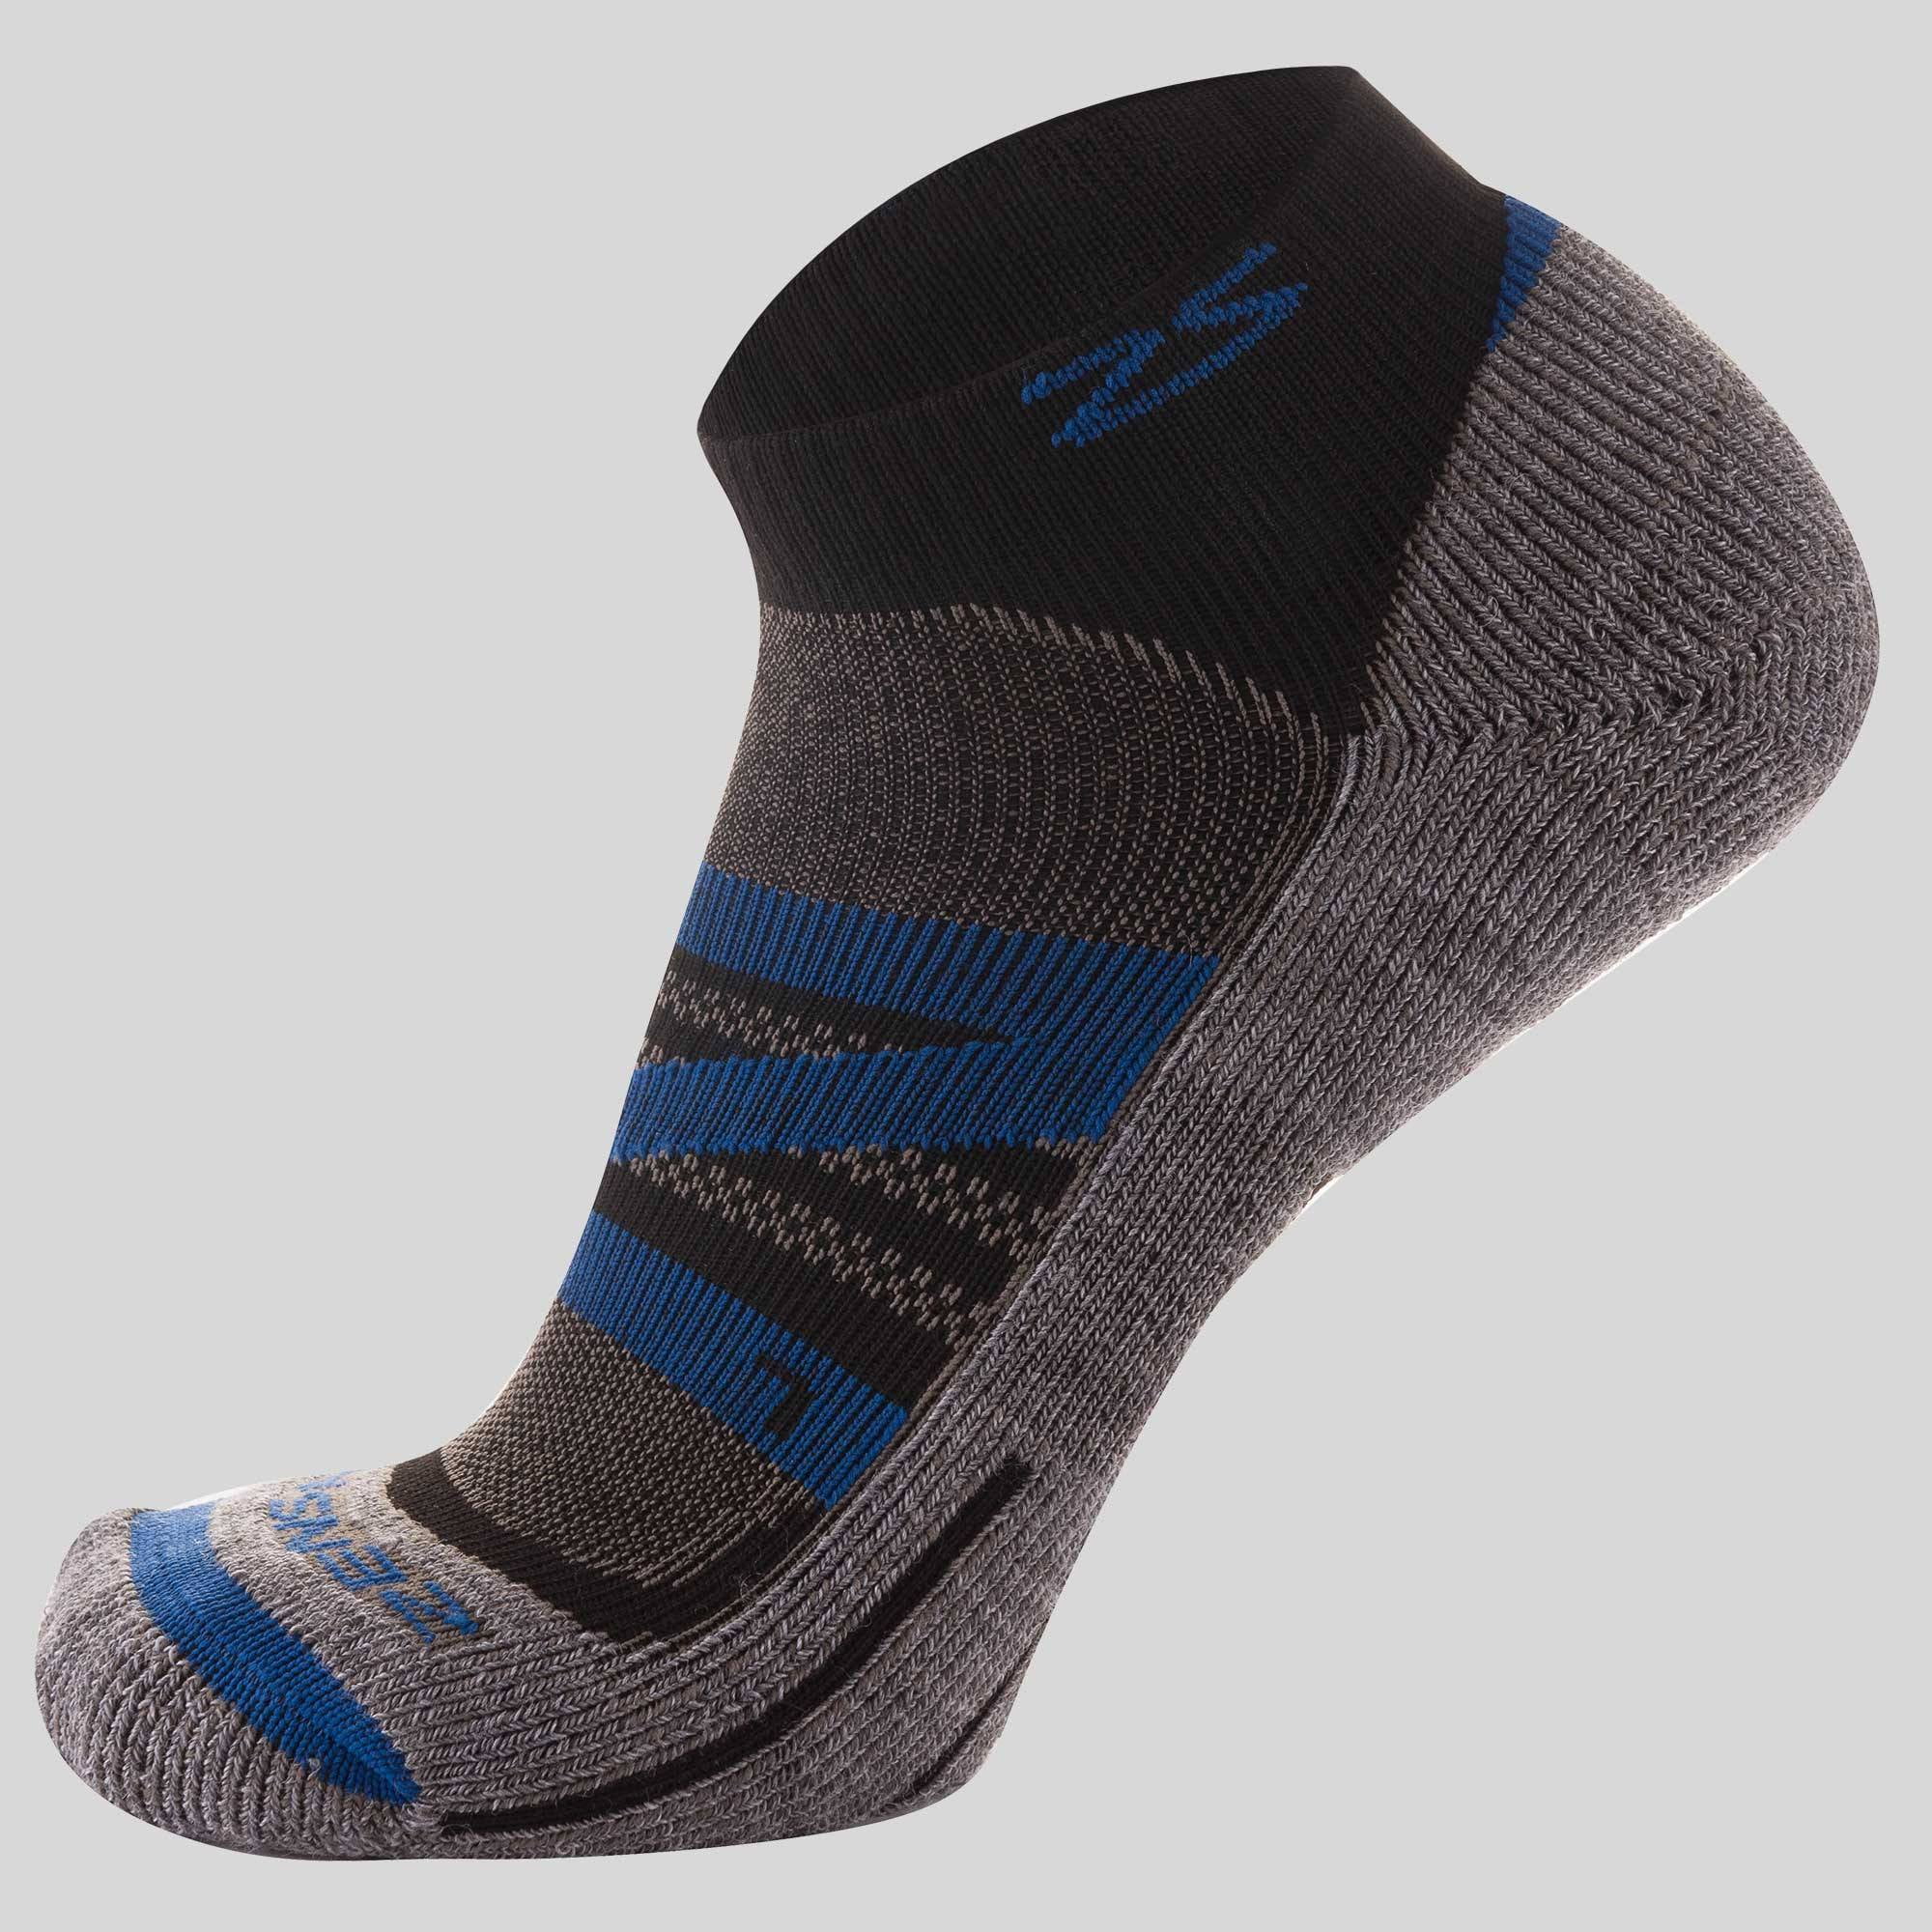 Rhino Gadget Football Grip Socks Anti Non Slip Long Knee Length Cushion with Grip Rubber Pads